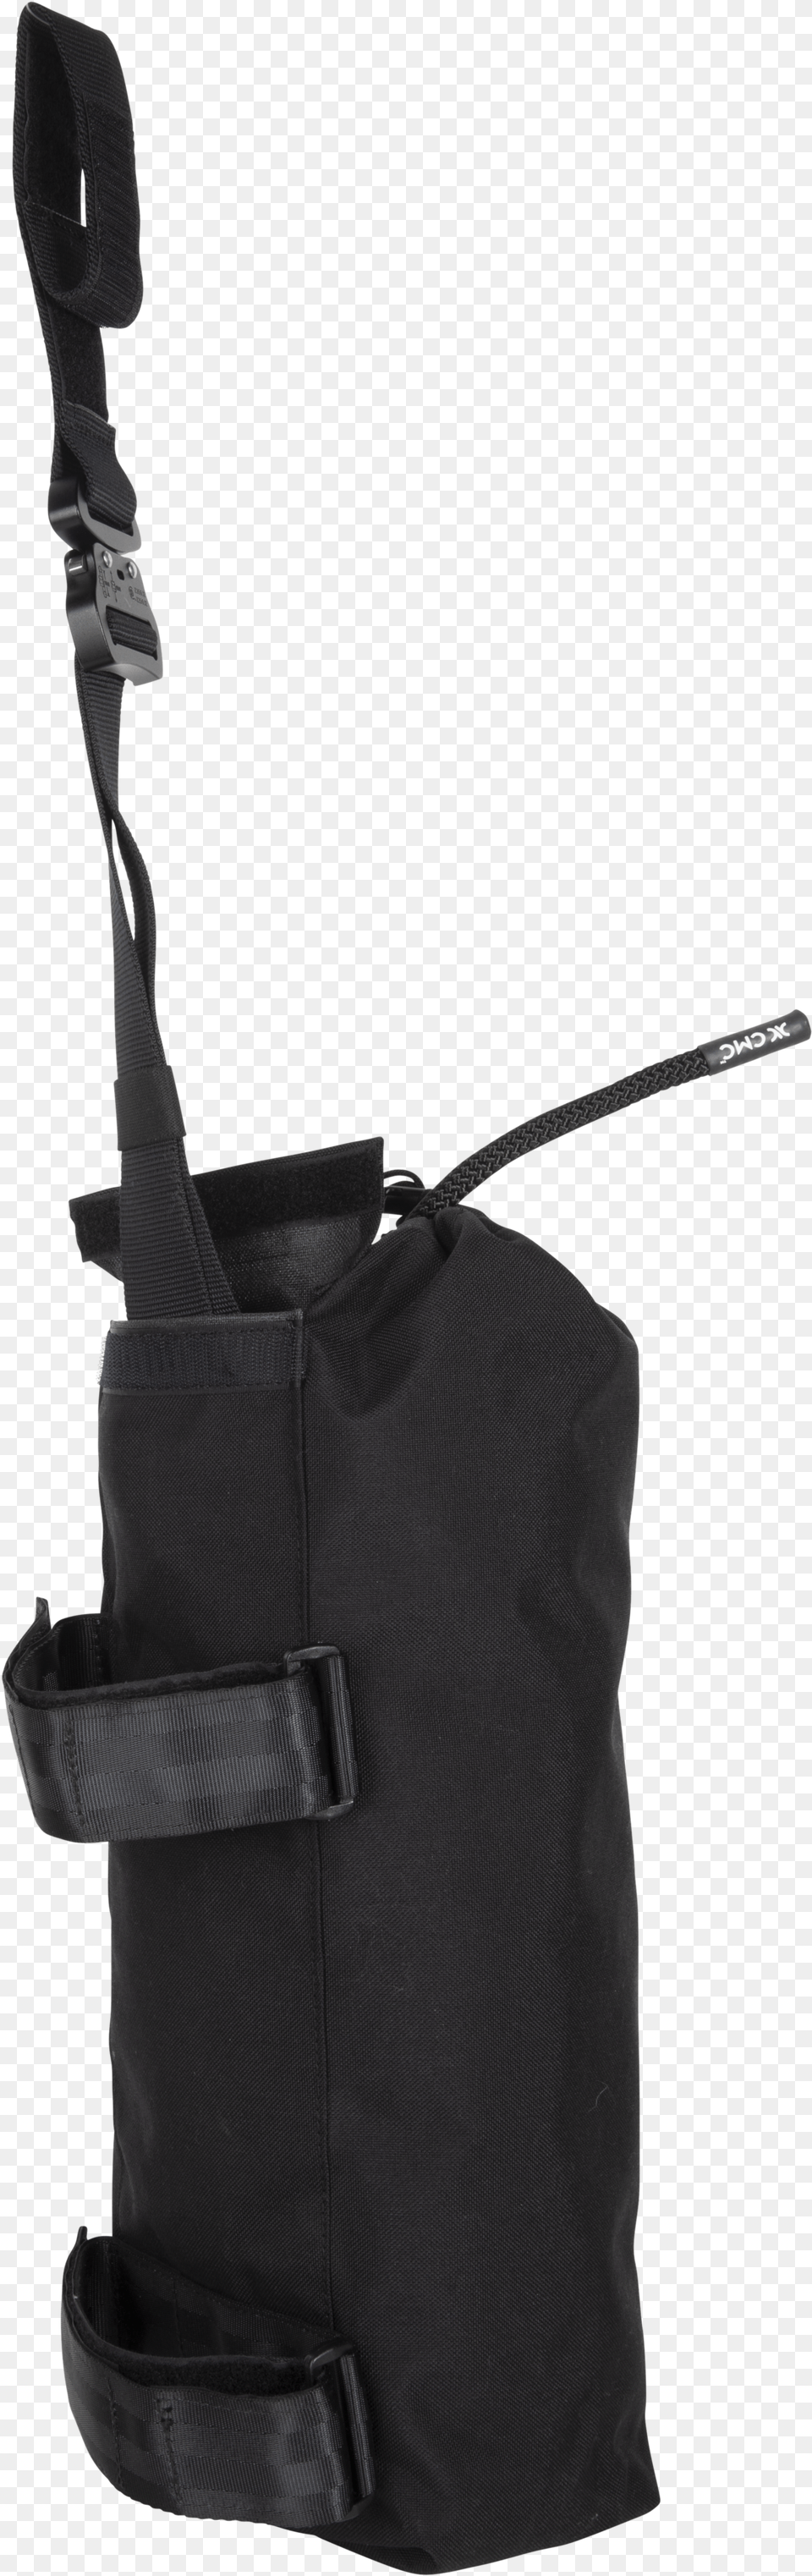 Grappling Hook Bag, Accessories, Handbag, Tote Bag Free Transparent Png